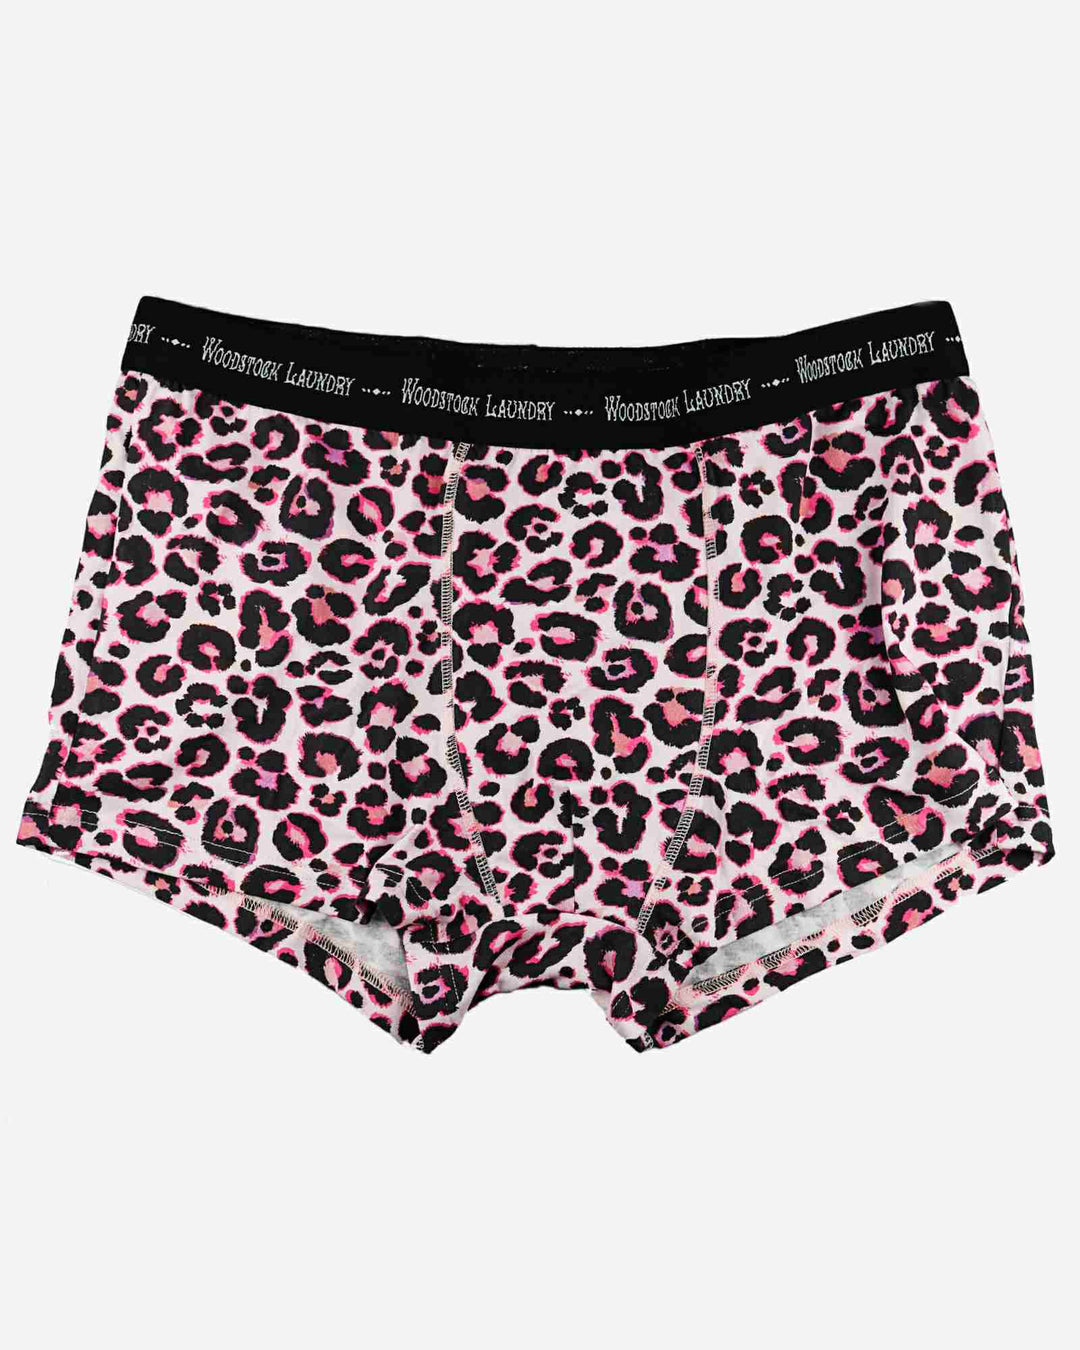 Novelty Boxer Light Brown Leopard Spot Texture Shorts Panties Men